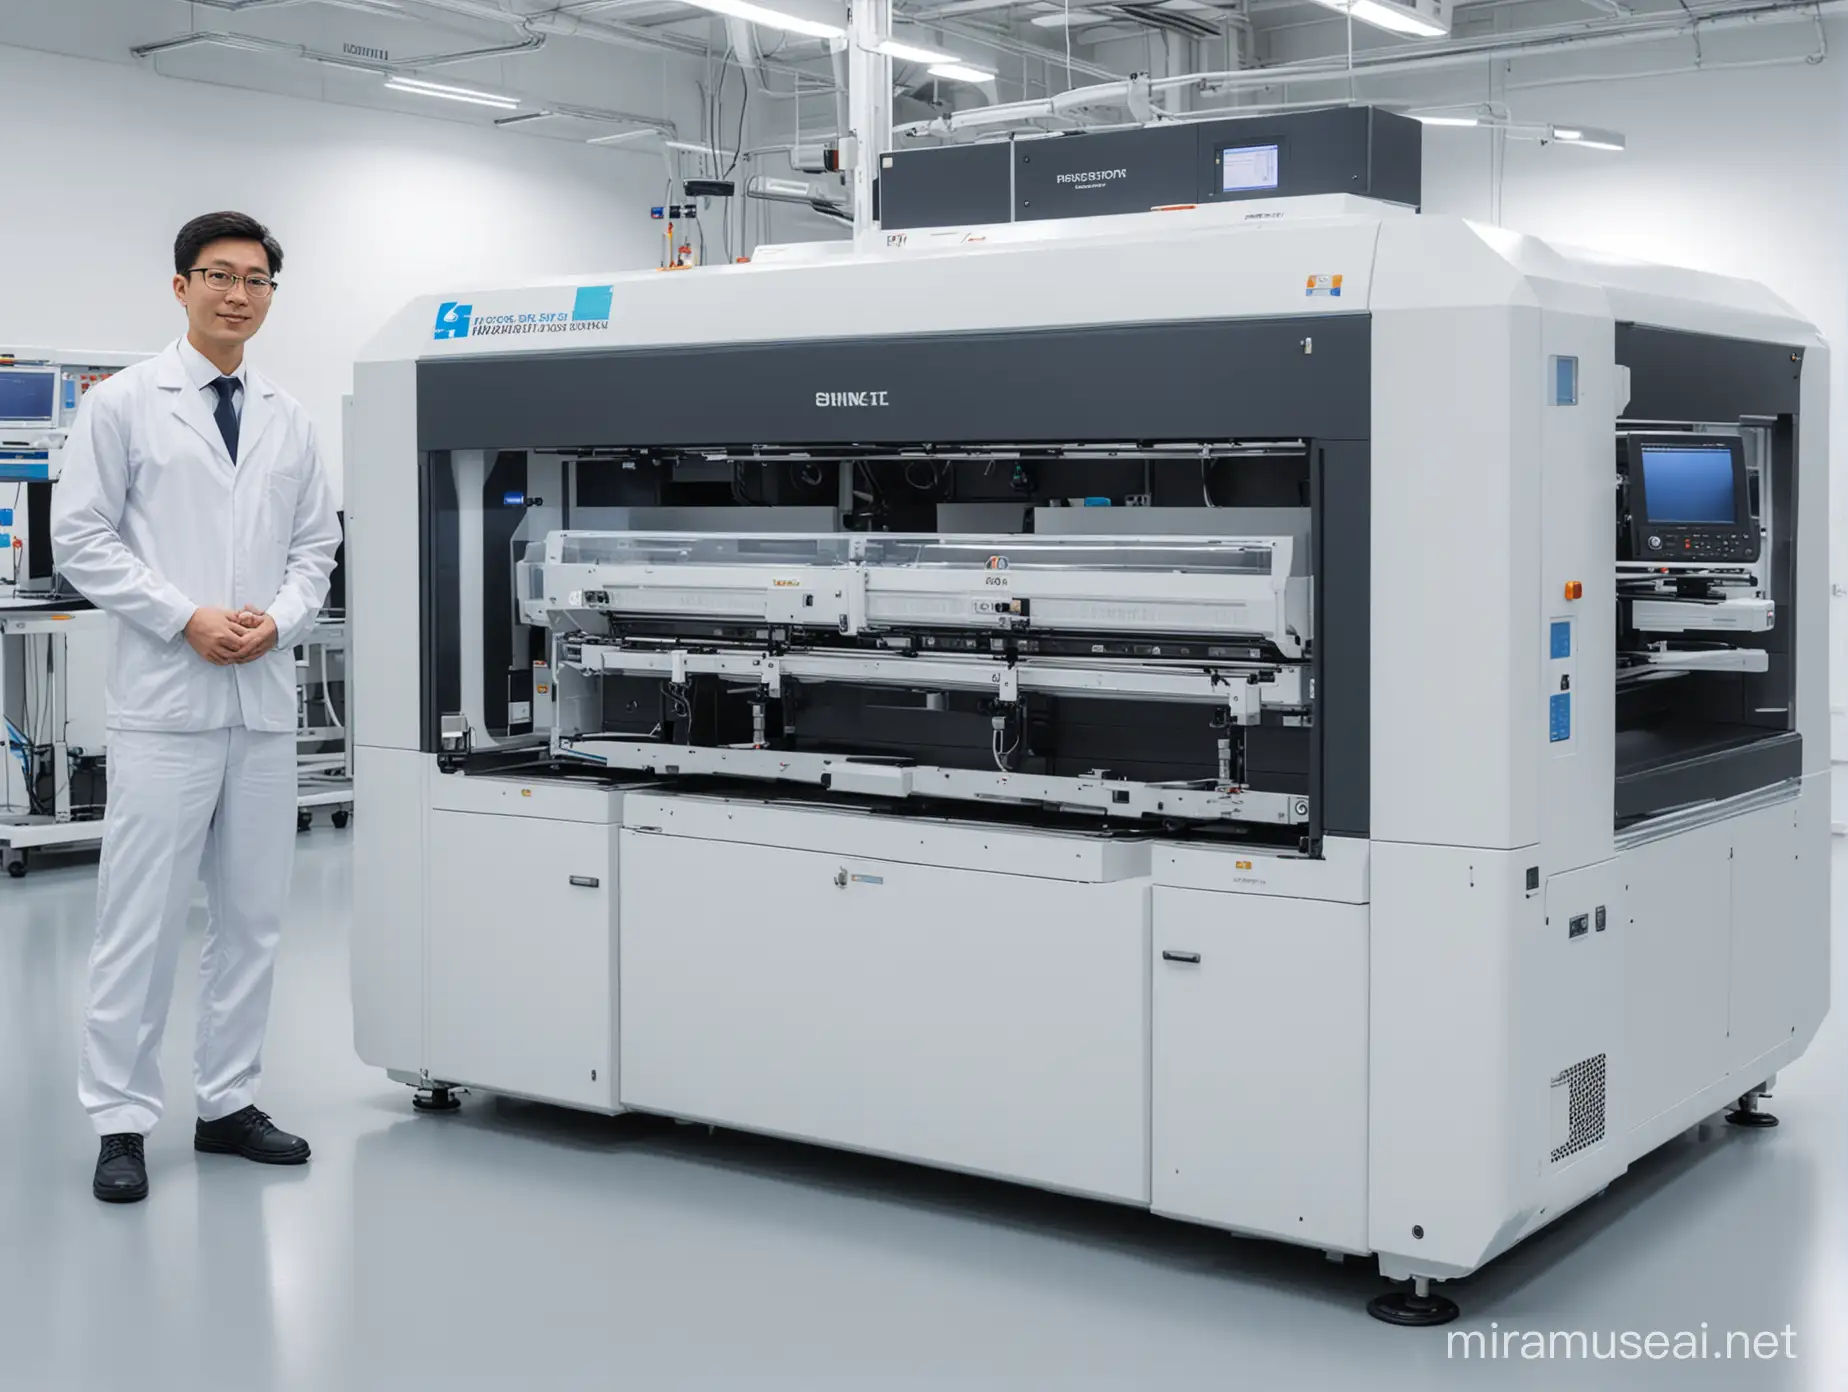 Advanced NanoMaterial Deposition Inkjet Printing in Futuristic Factory Setting